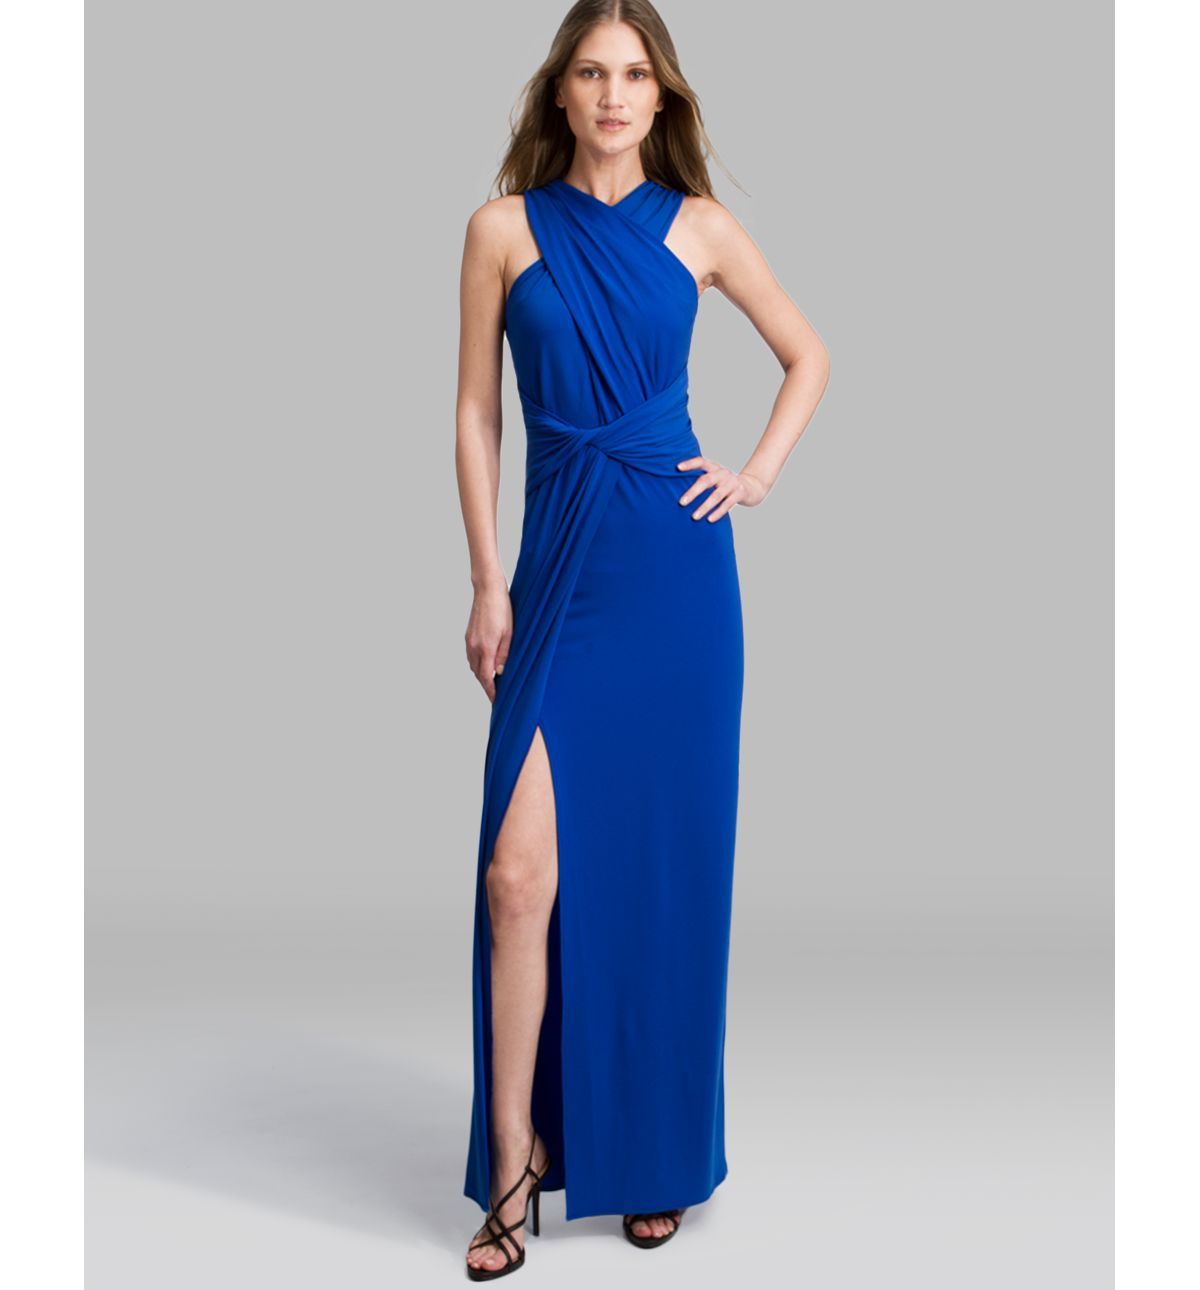 Lyst - Halston Gown Crisscross Neck Jersey in Blue